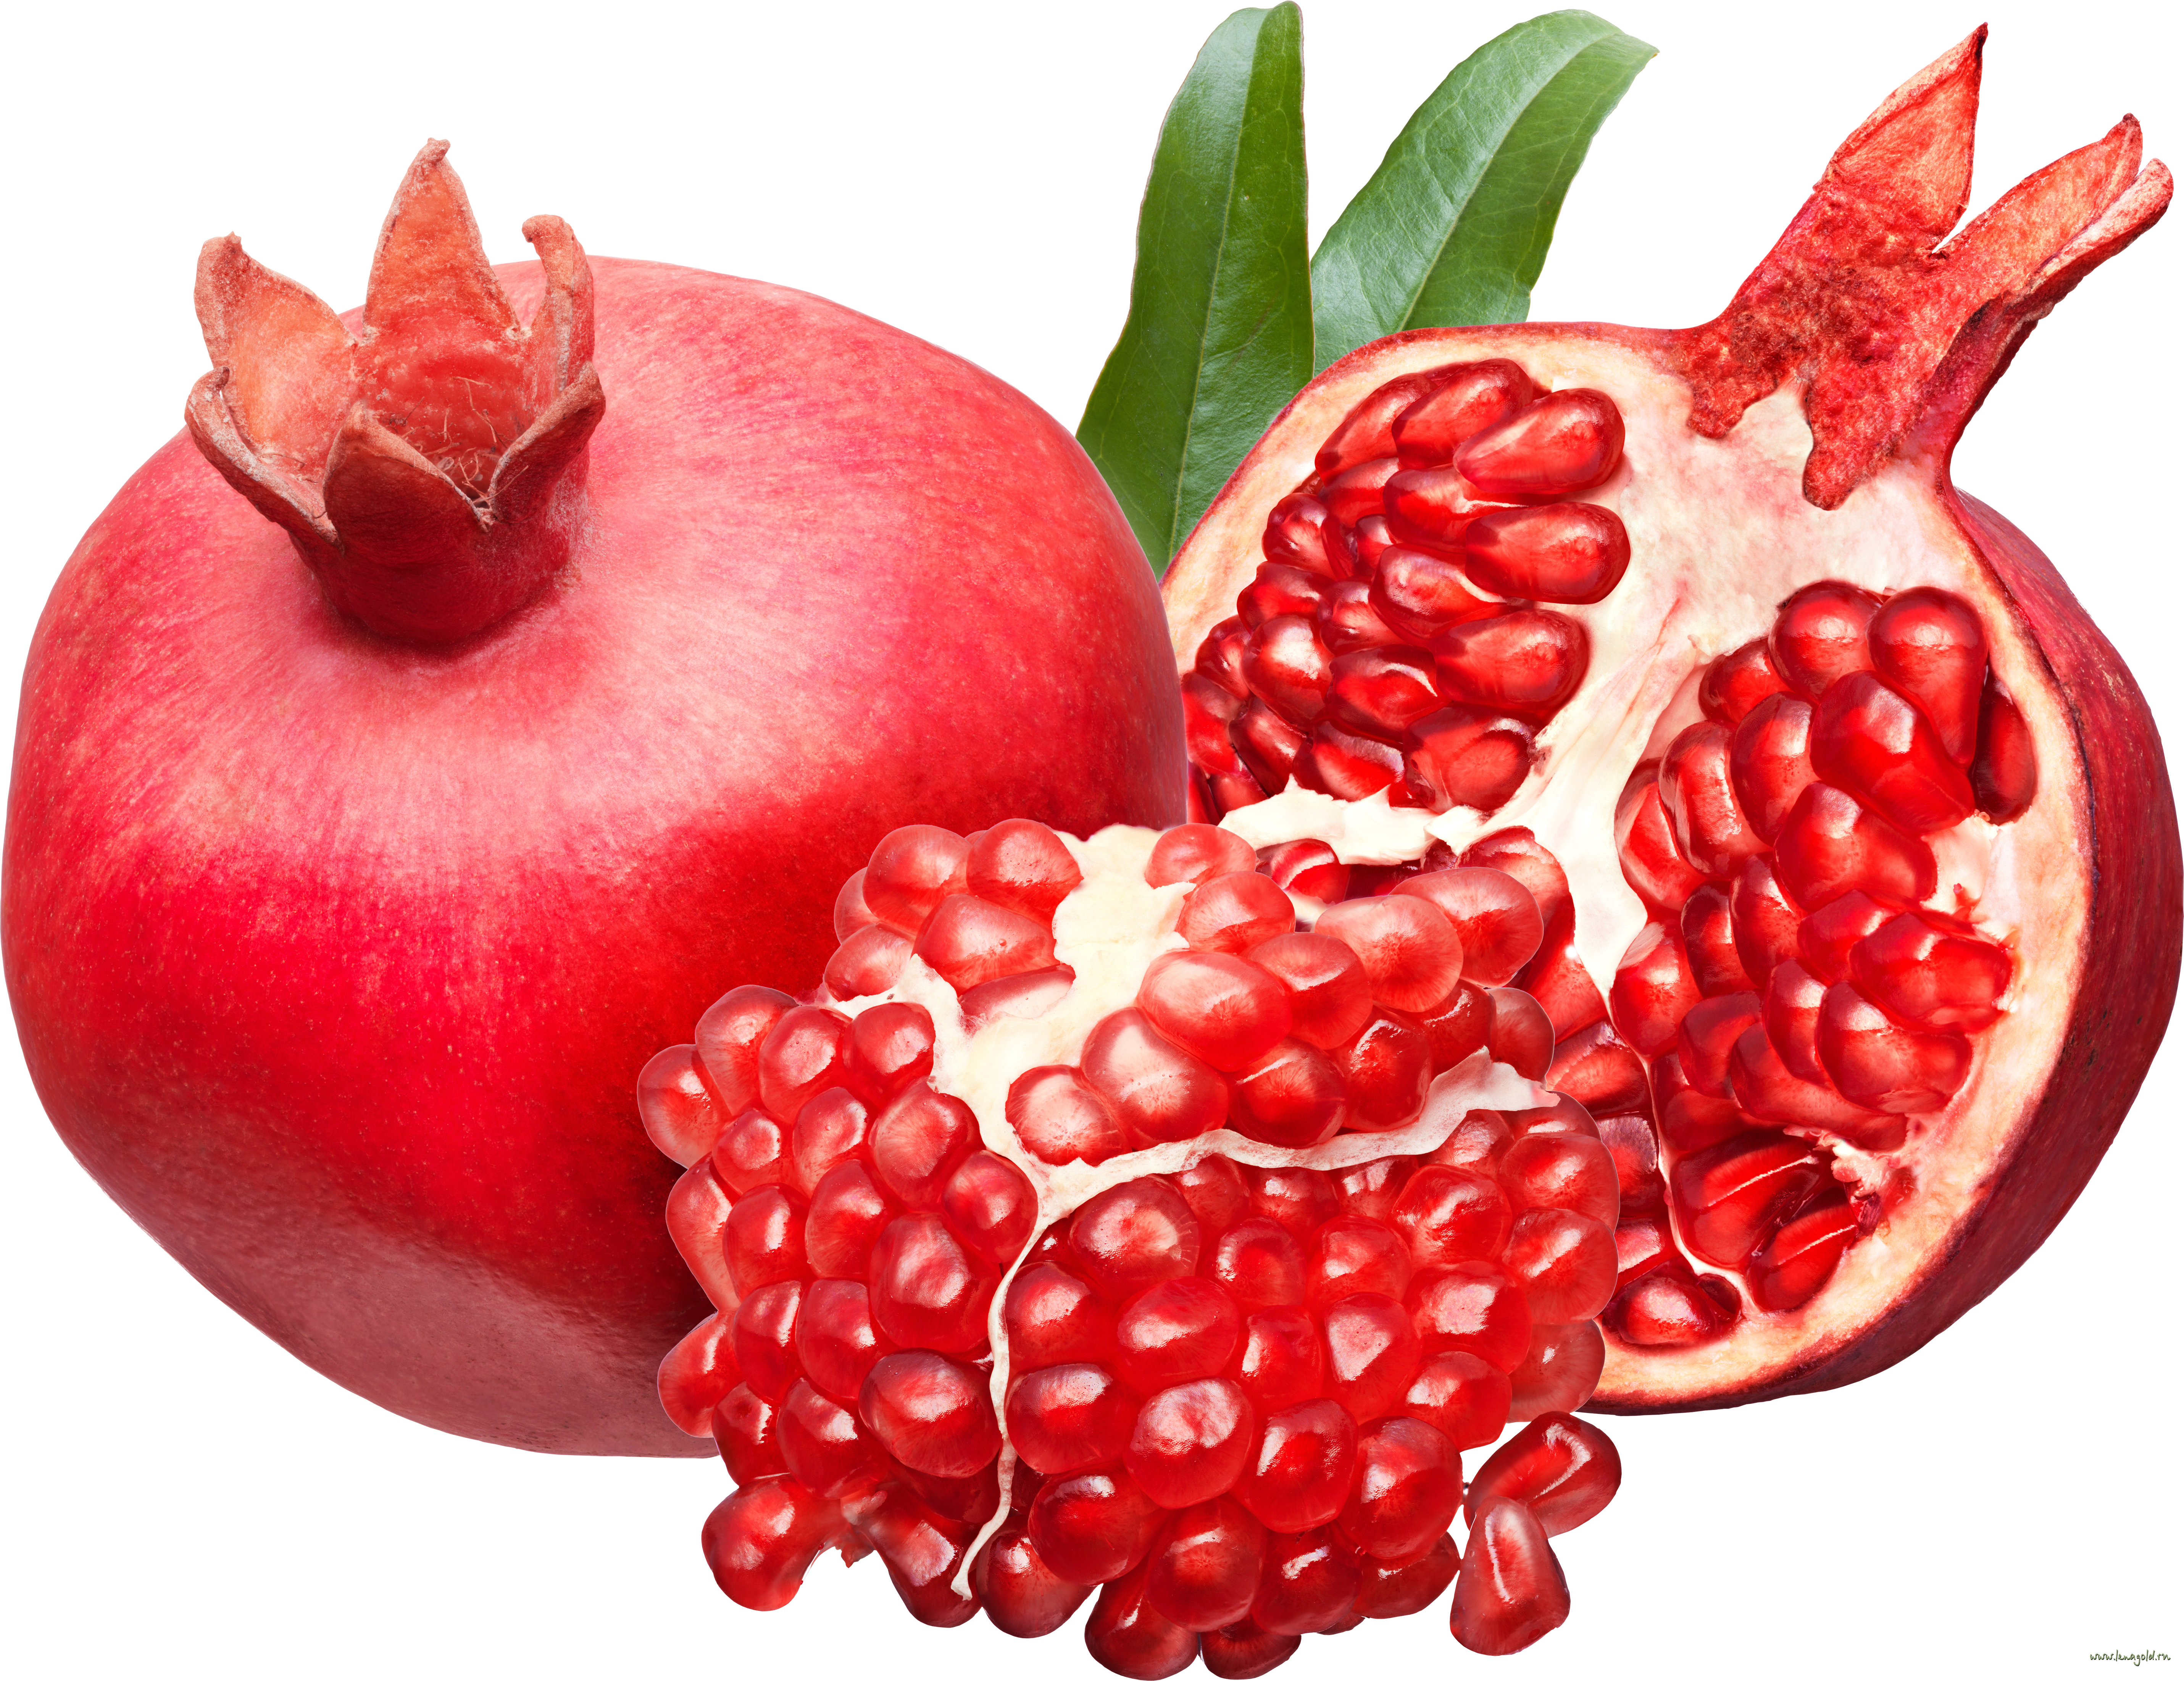 A Pomegranate And A Cut Open Pomegranate